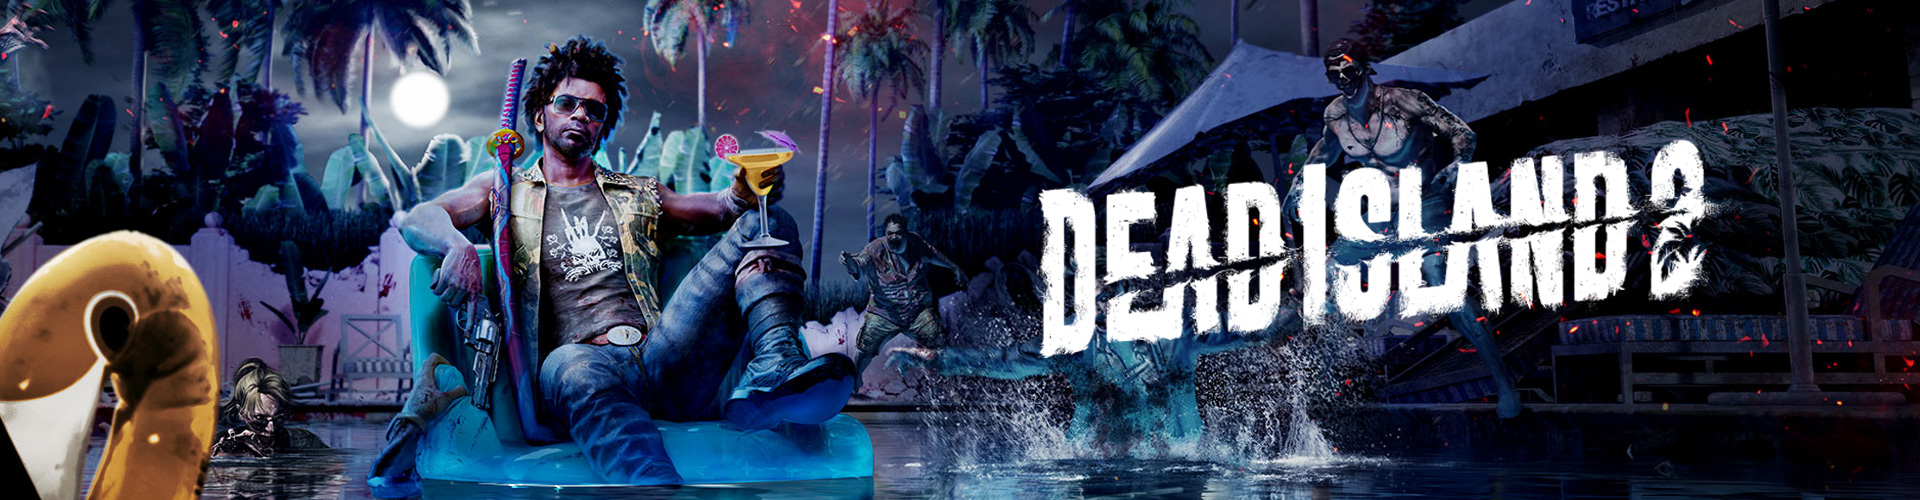 Dead Island 2 Ã© um jogo de terror multijogadores contra zombies